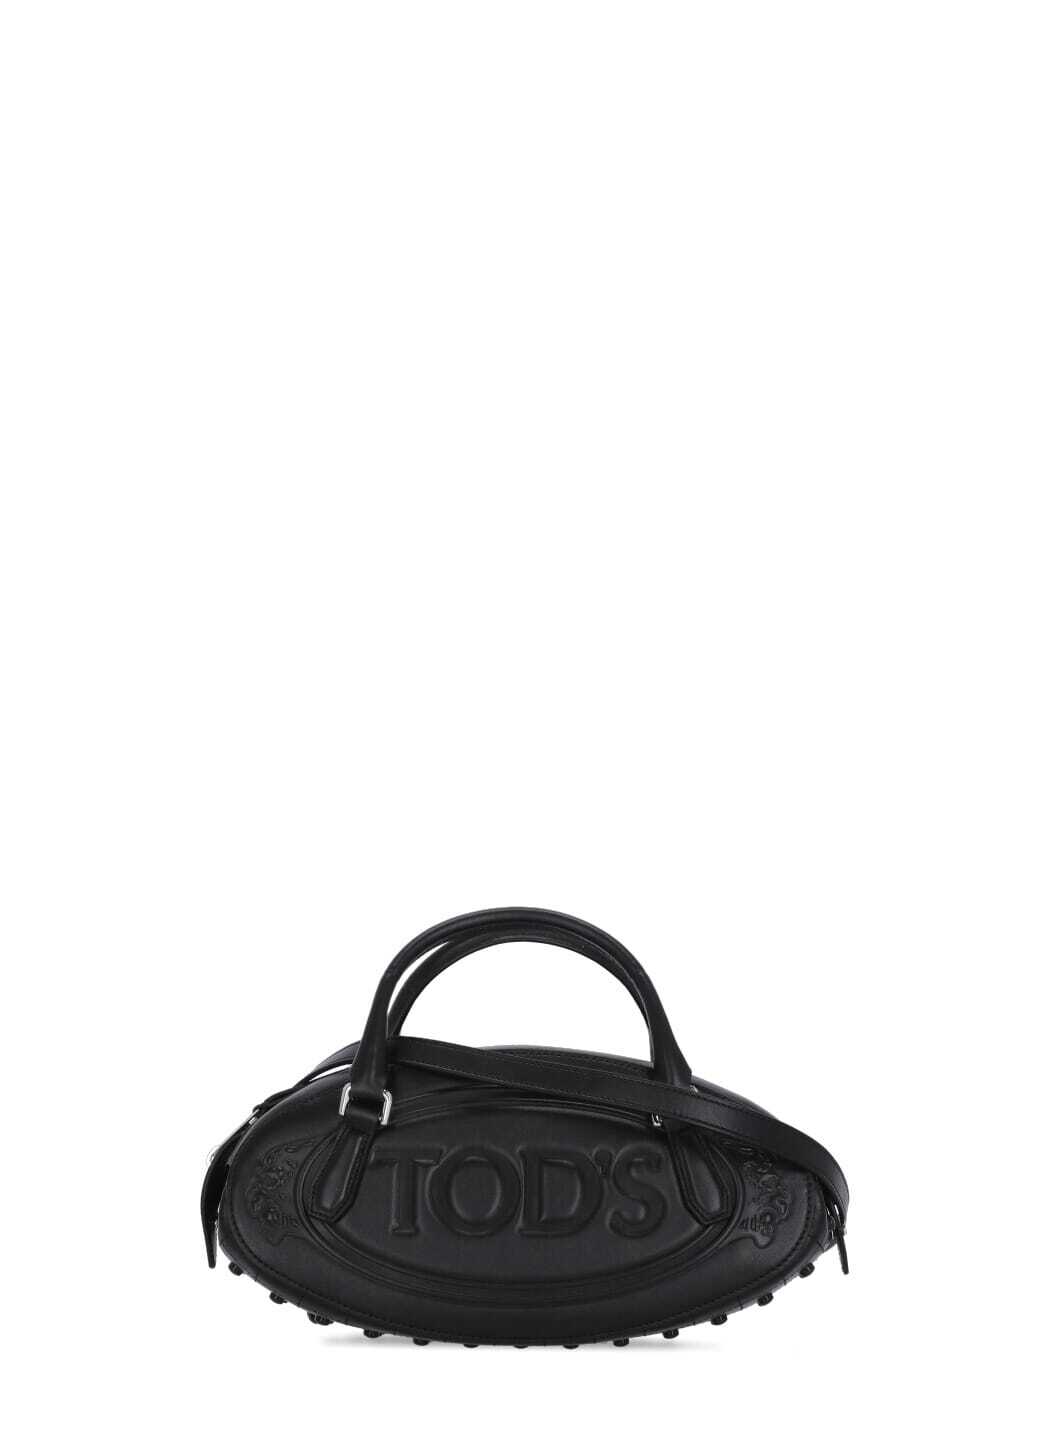 Tod's Leather Mini Boston Bag in black